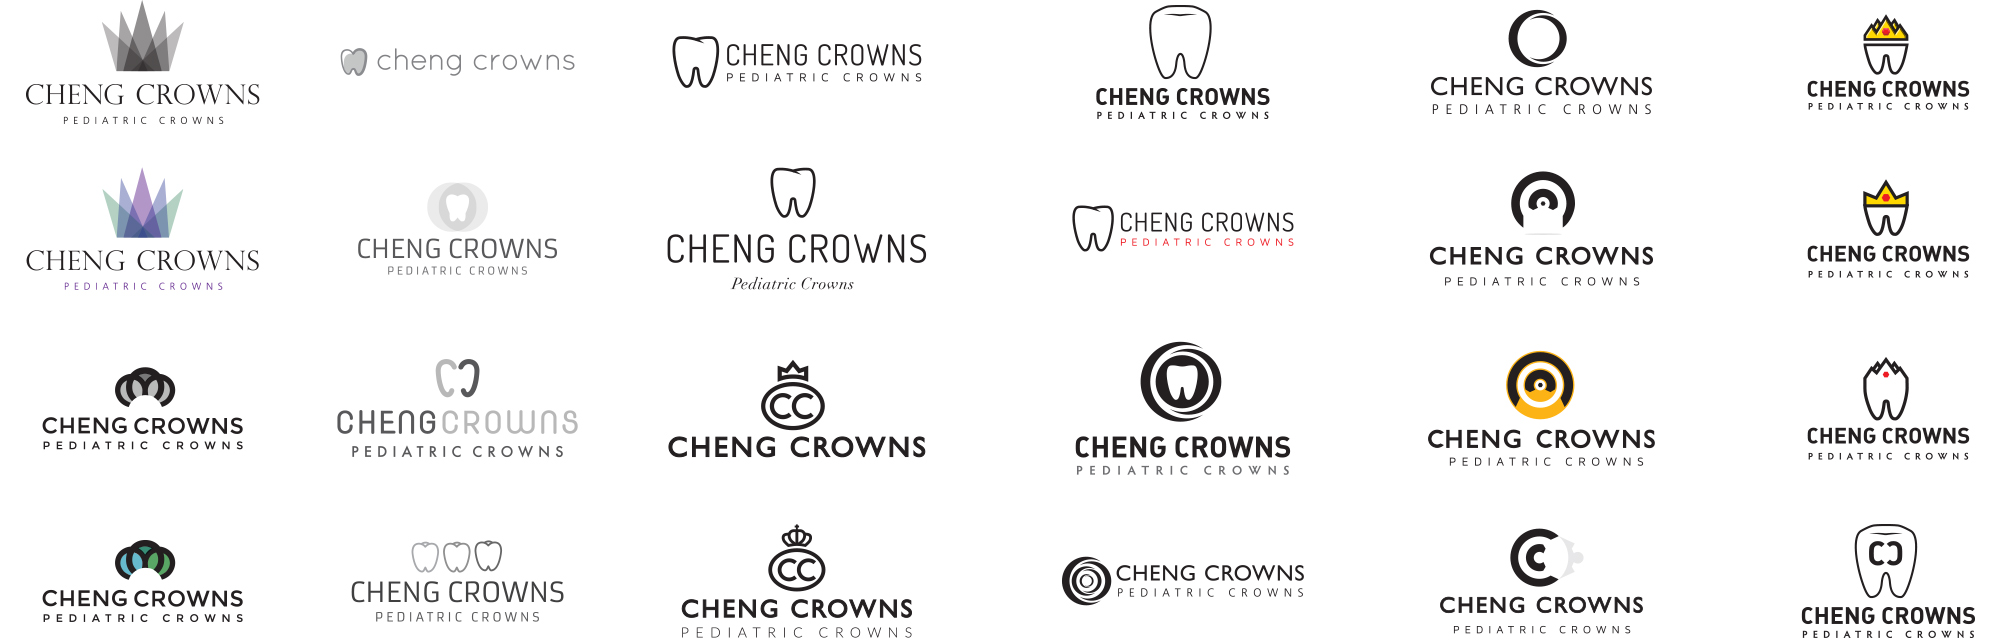 Cheng Crowns Logo Brainstorm